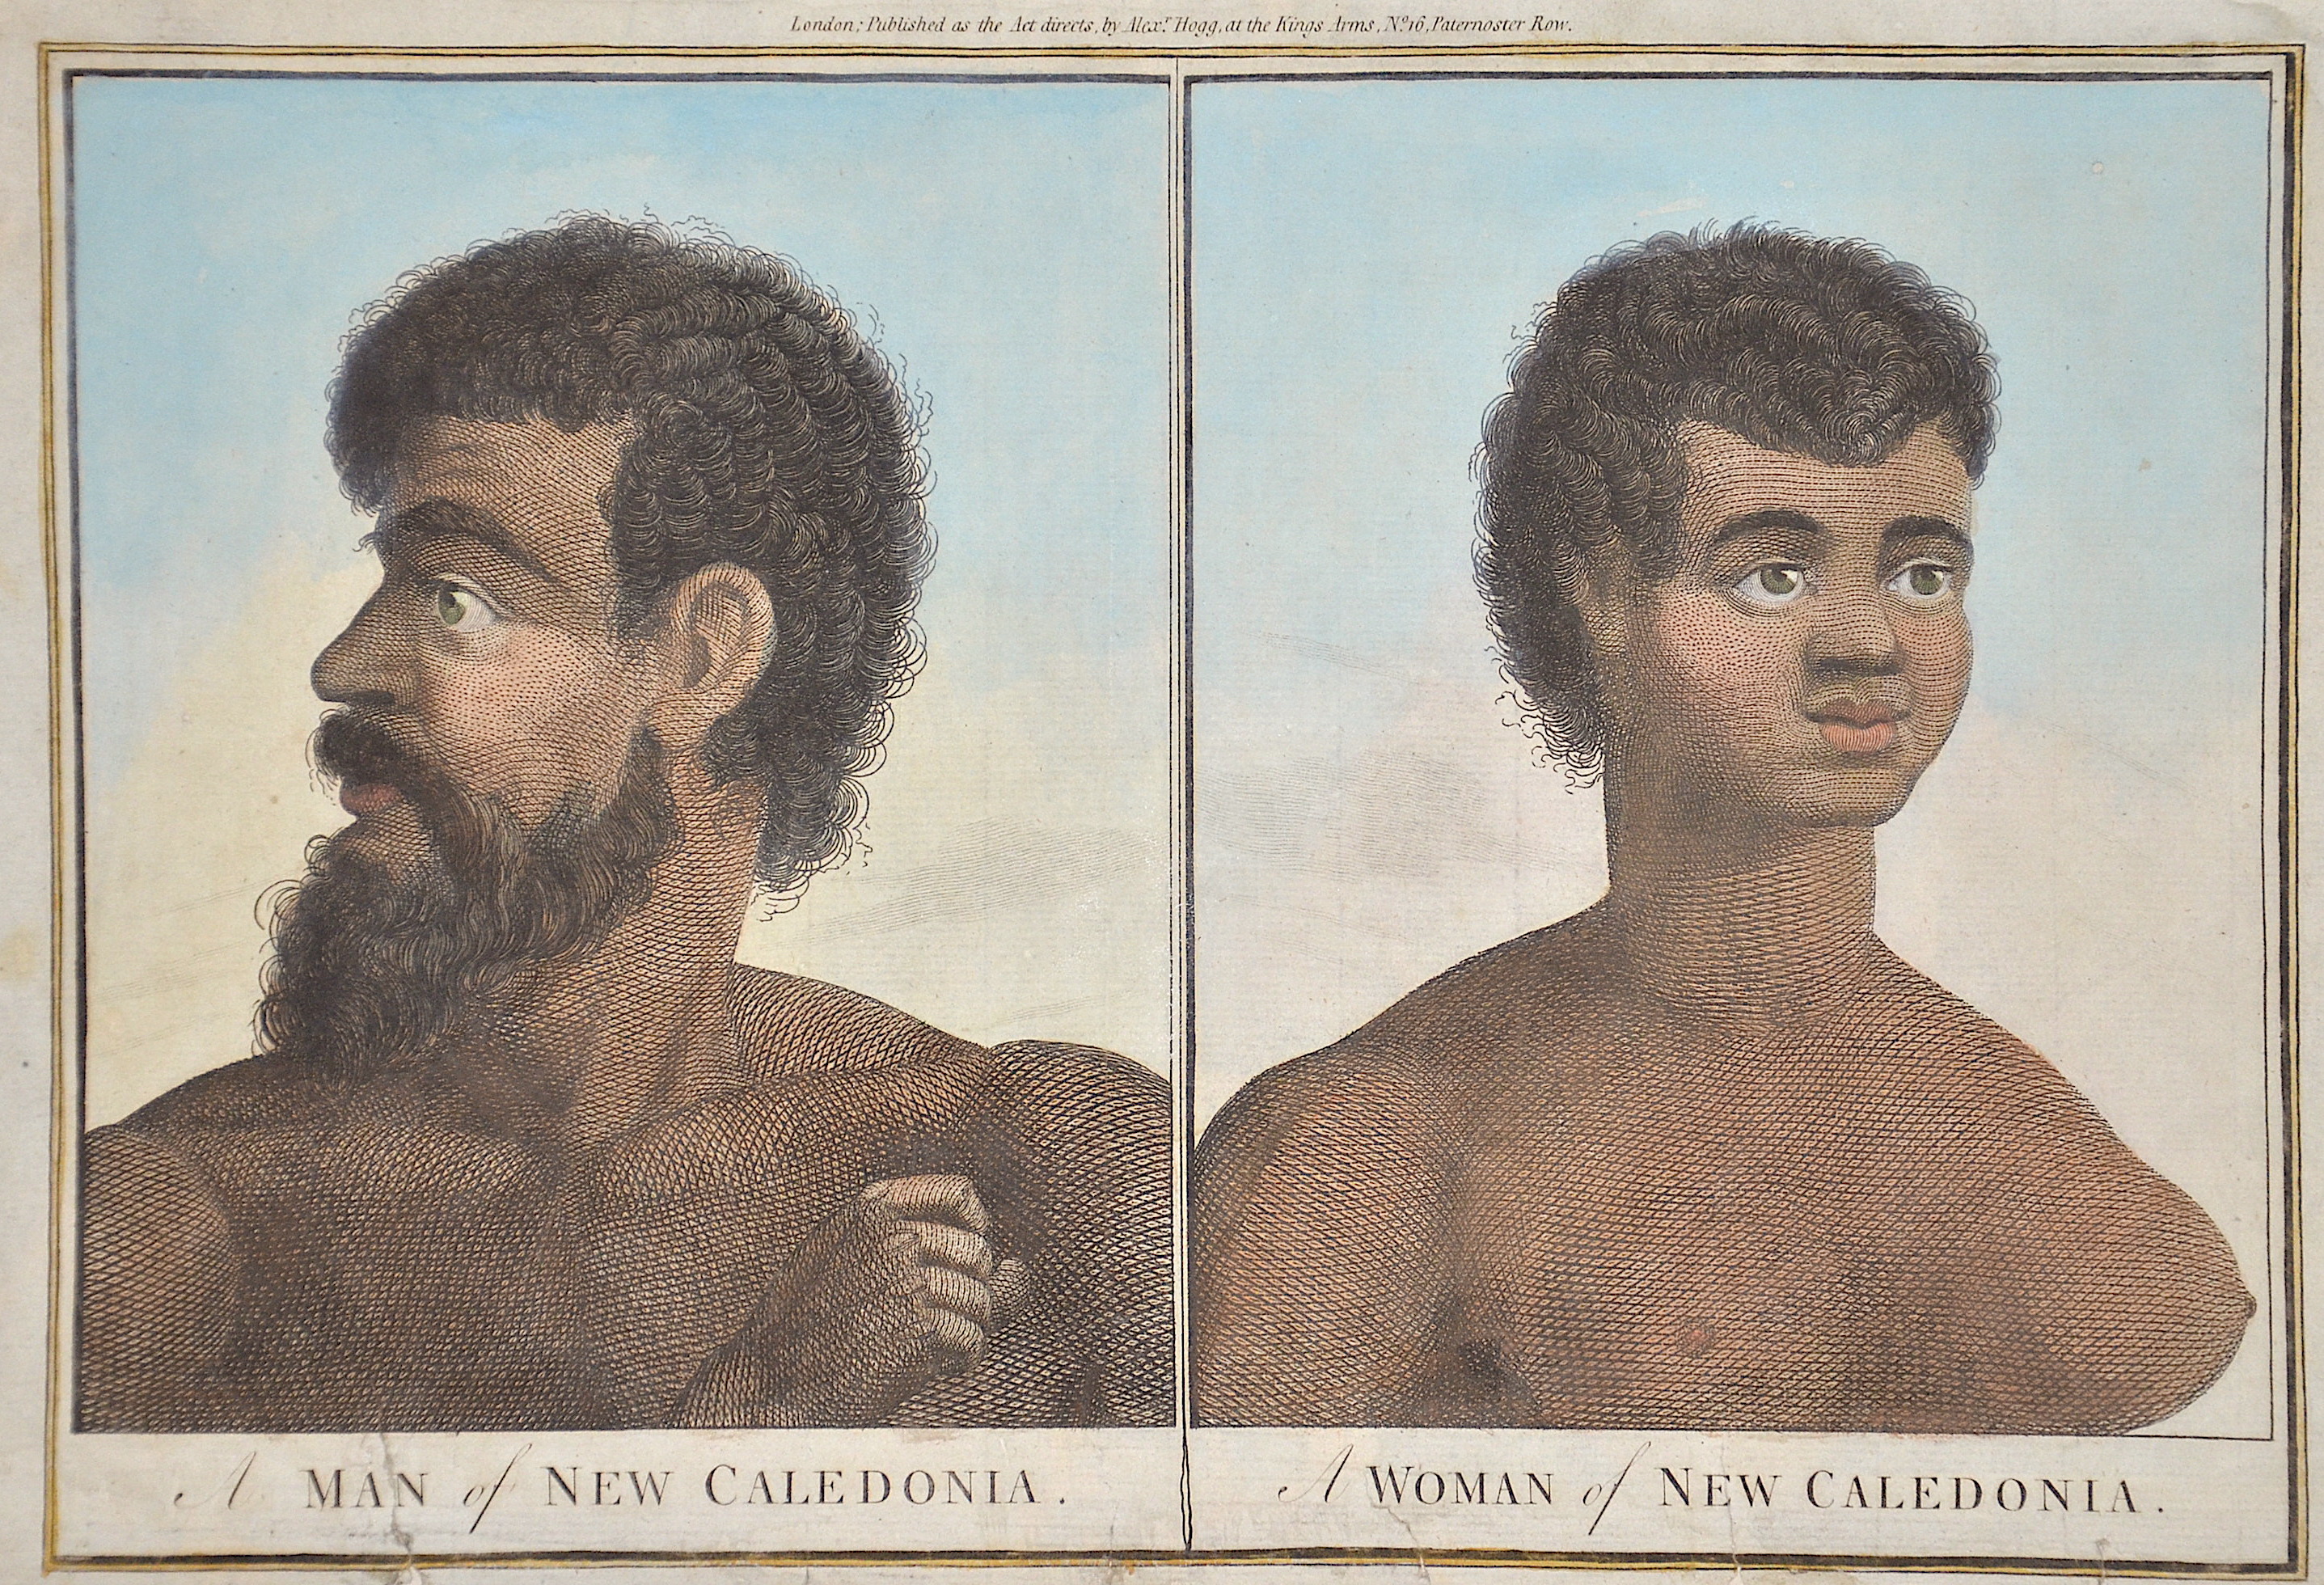 Hogg  Man of New Caledonia/ Woman of New Caledonia